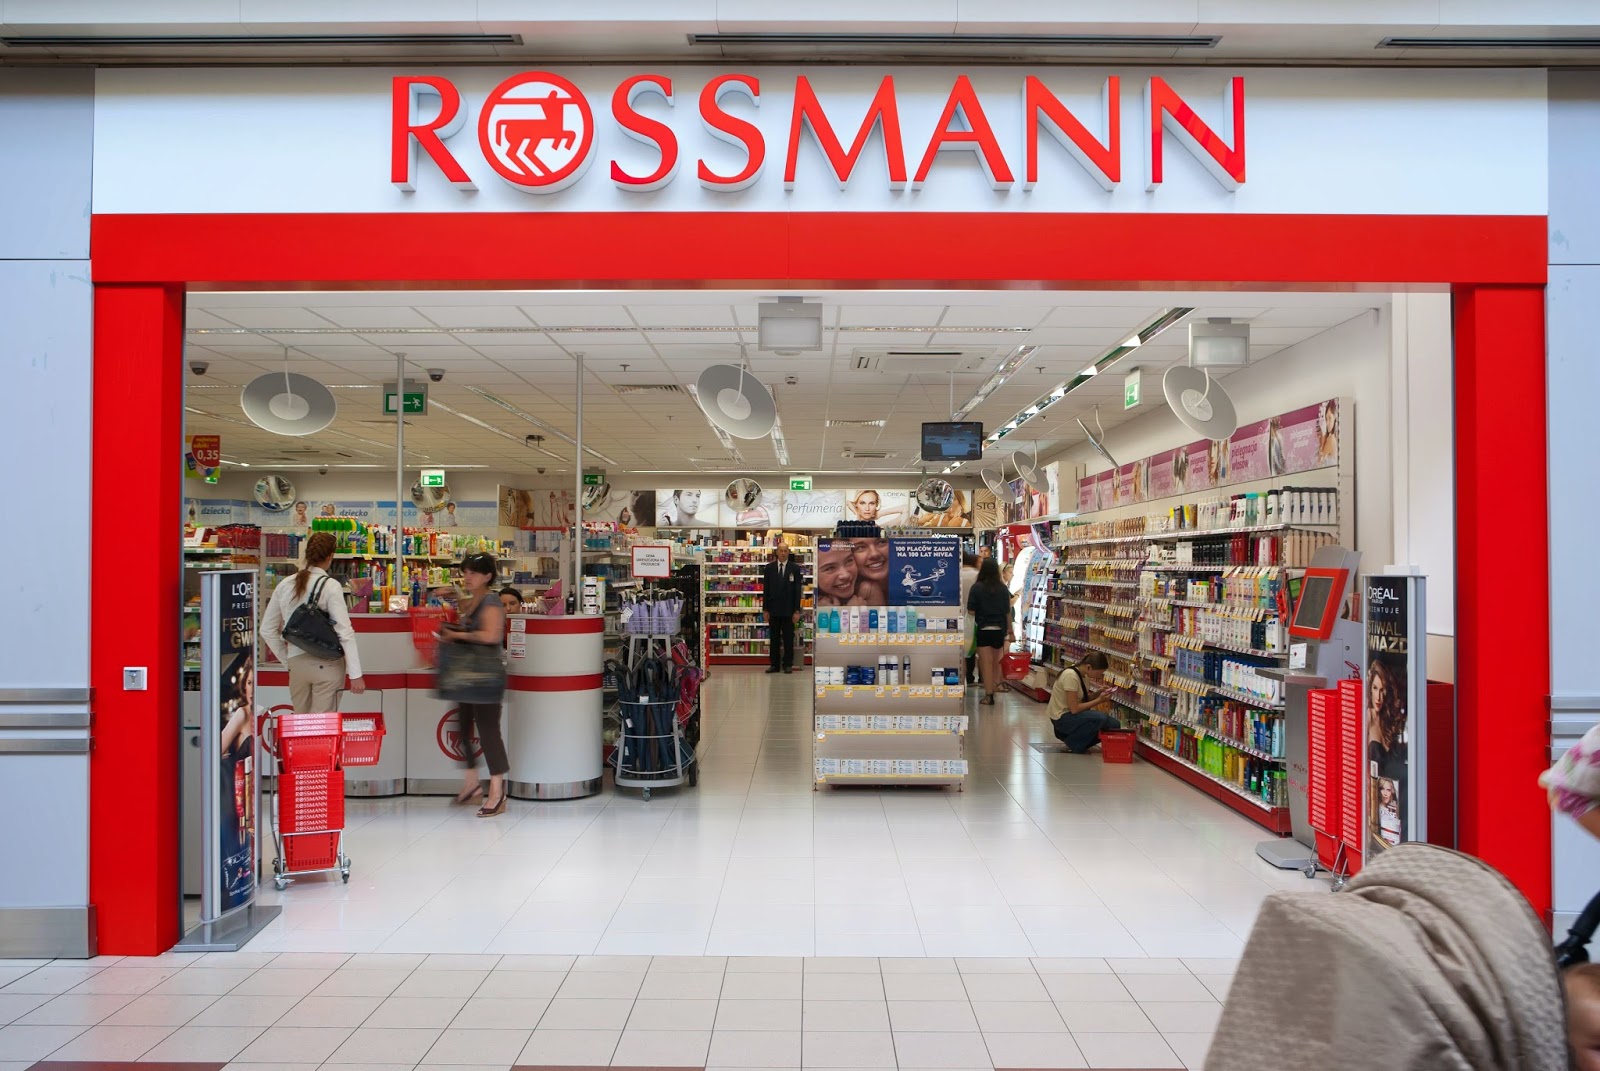 Roosmann